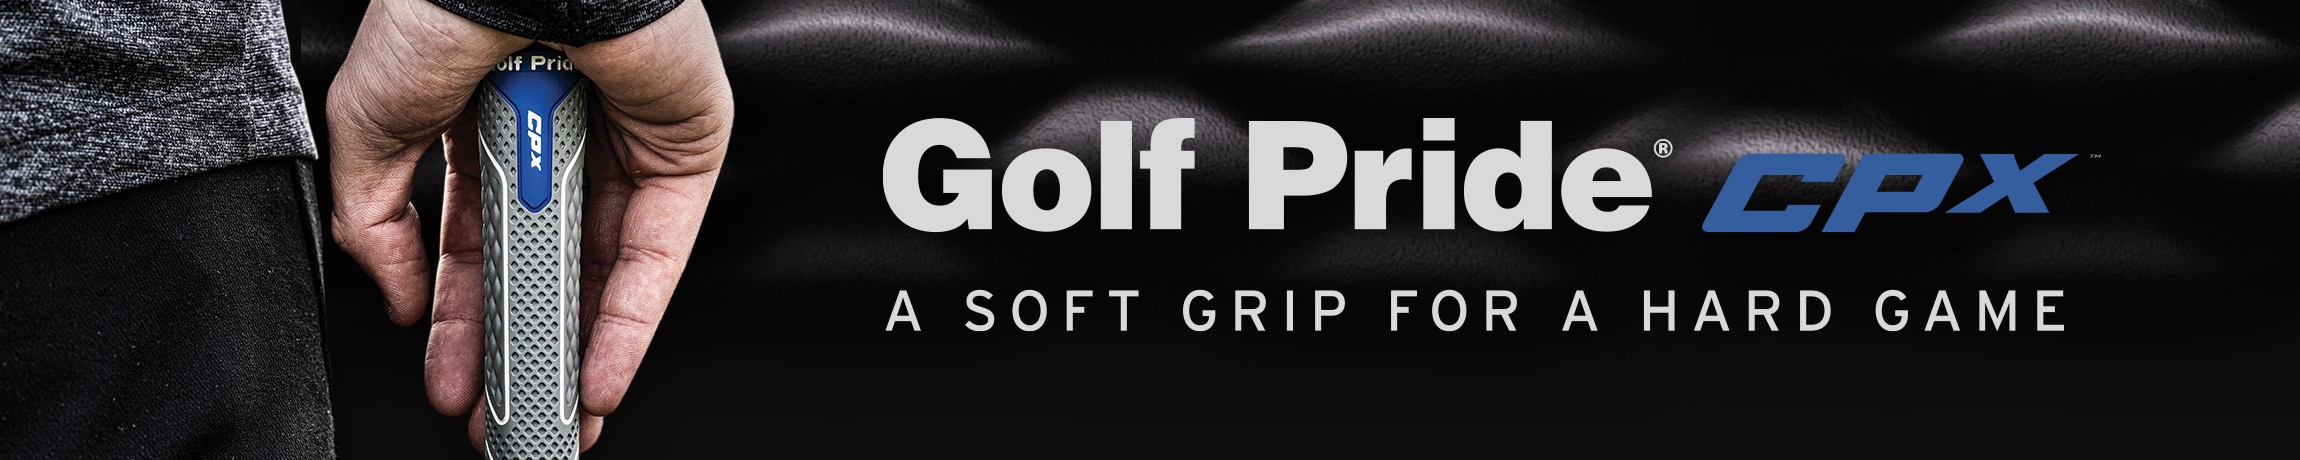 Golf Pride CPX banner